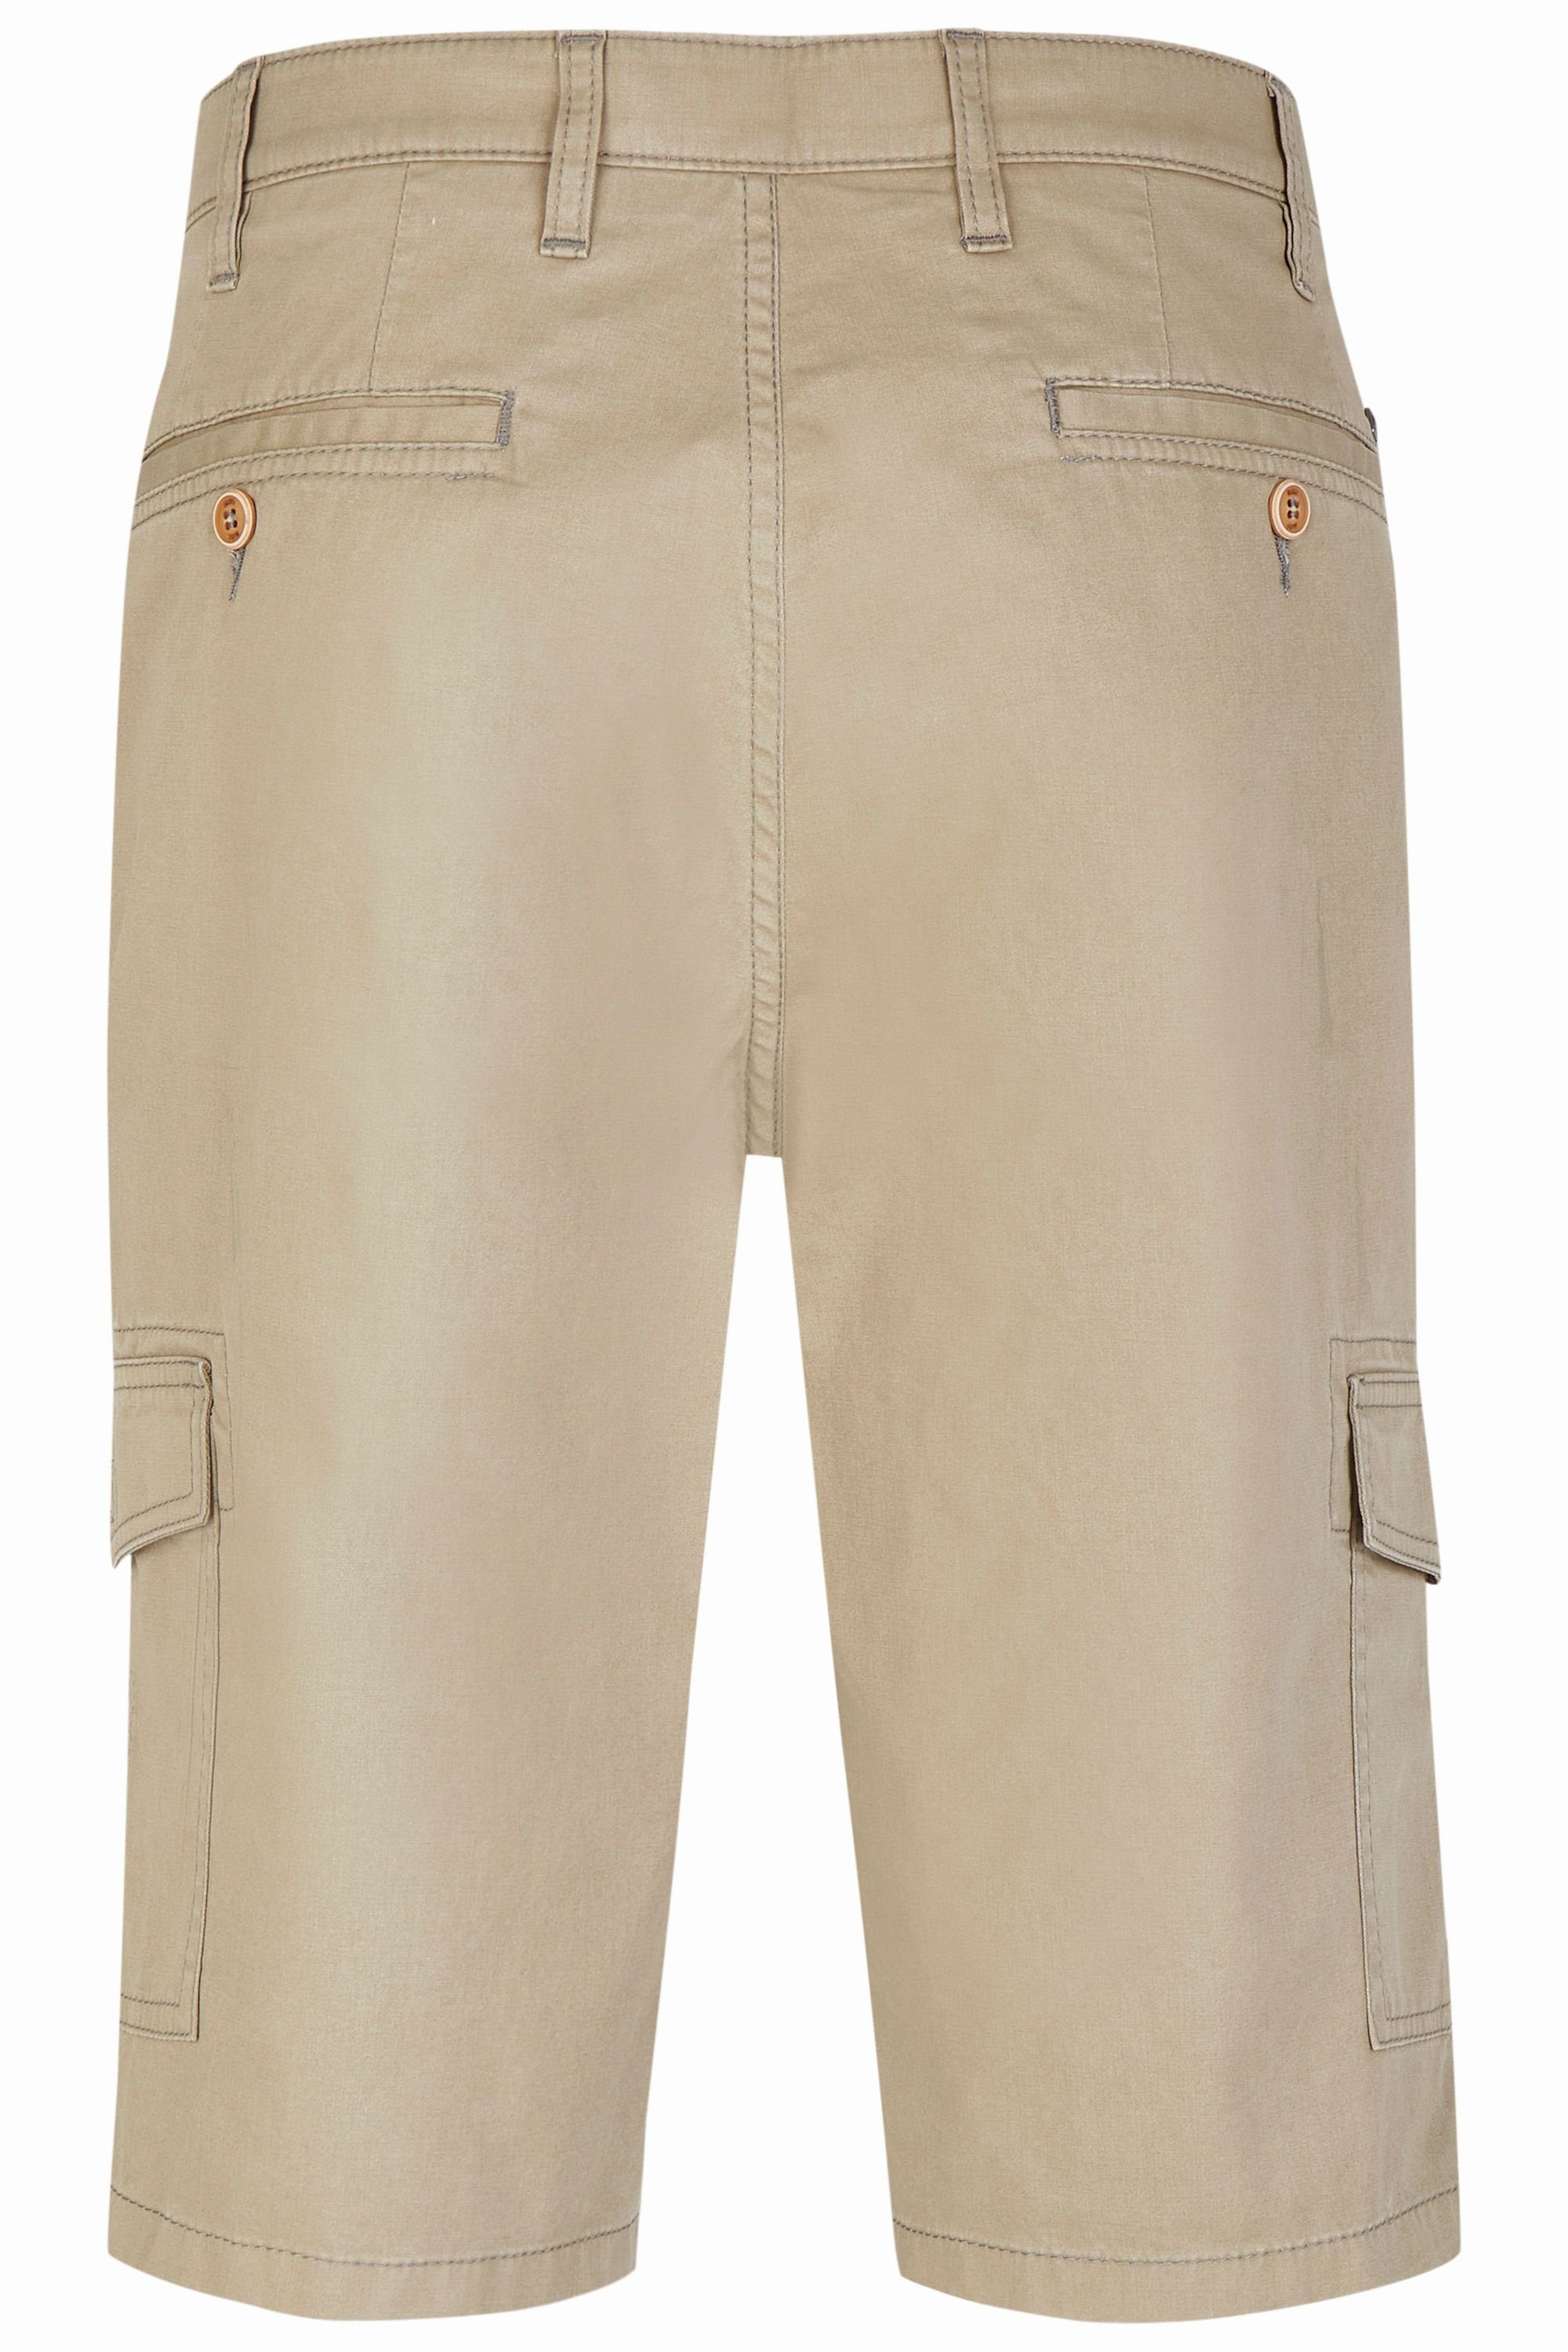 616 Shorts (21) aubi Modell Fit Stoffhose Flex beige Herren High Perfect Paisley aubi: